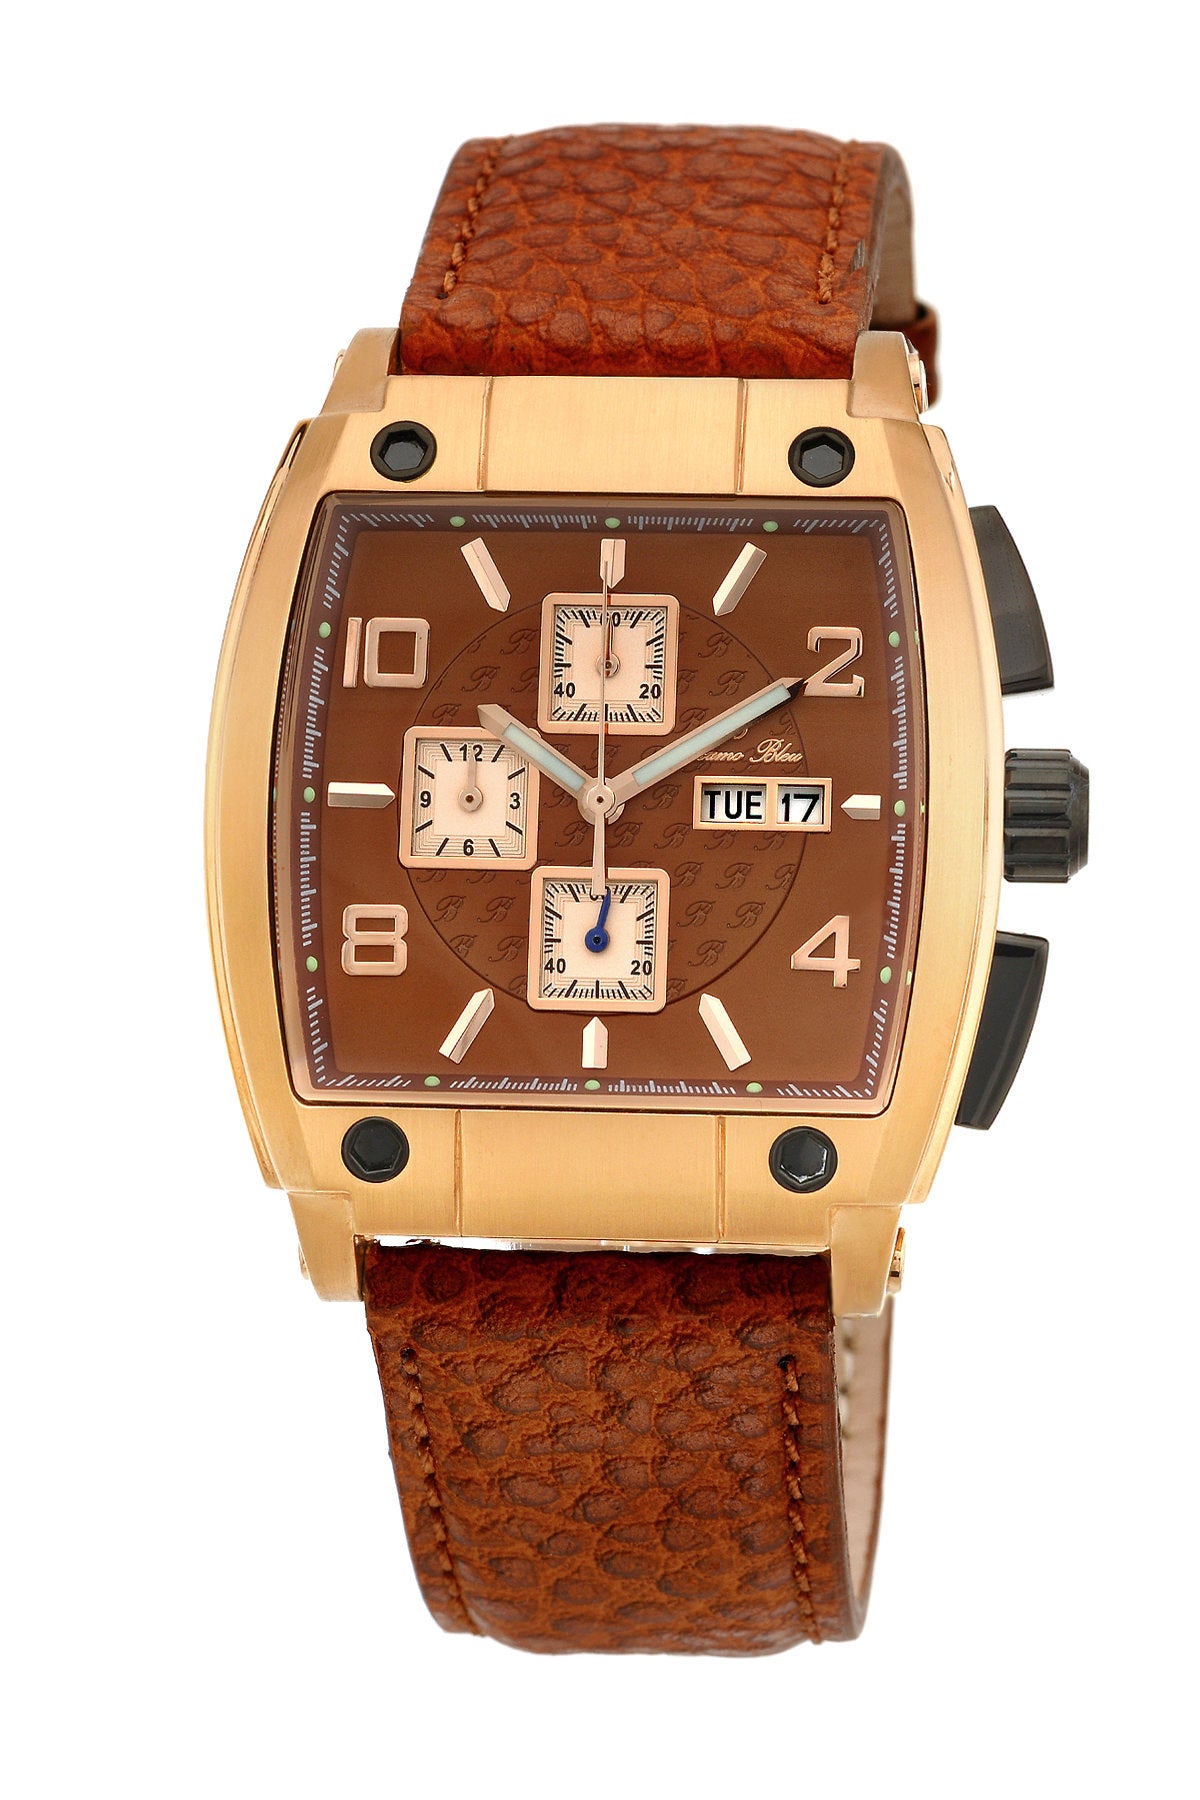 Porsamo Bleu London luxury chronograph men's watch, genuine leather band, rose, brown 142CLOL